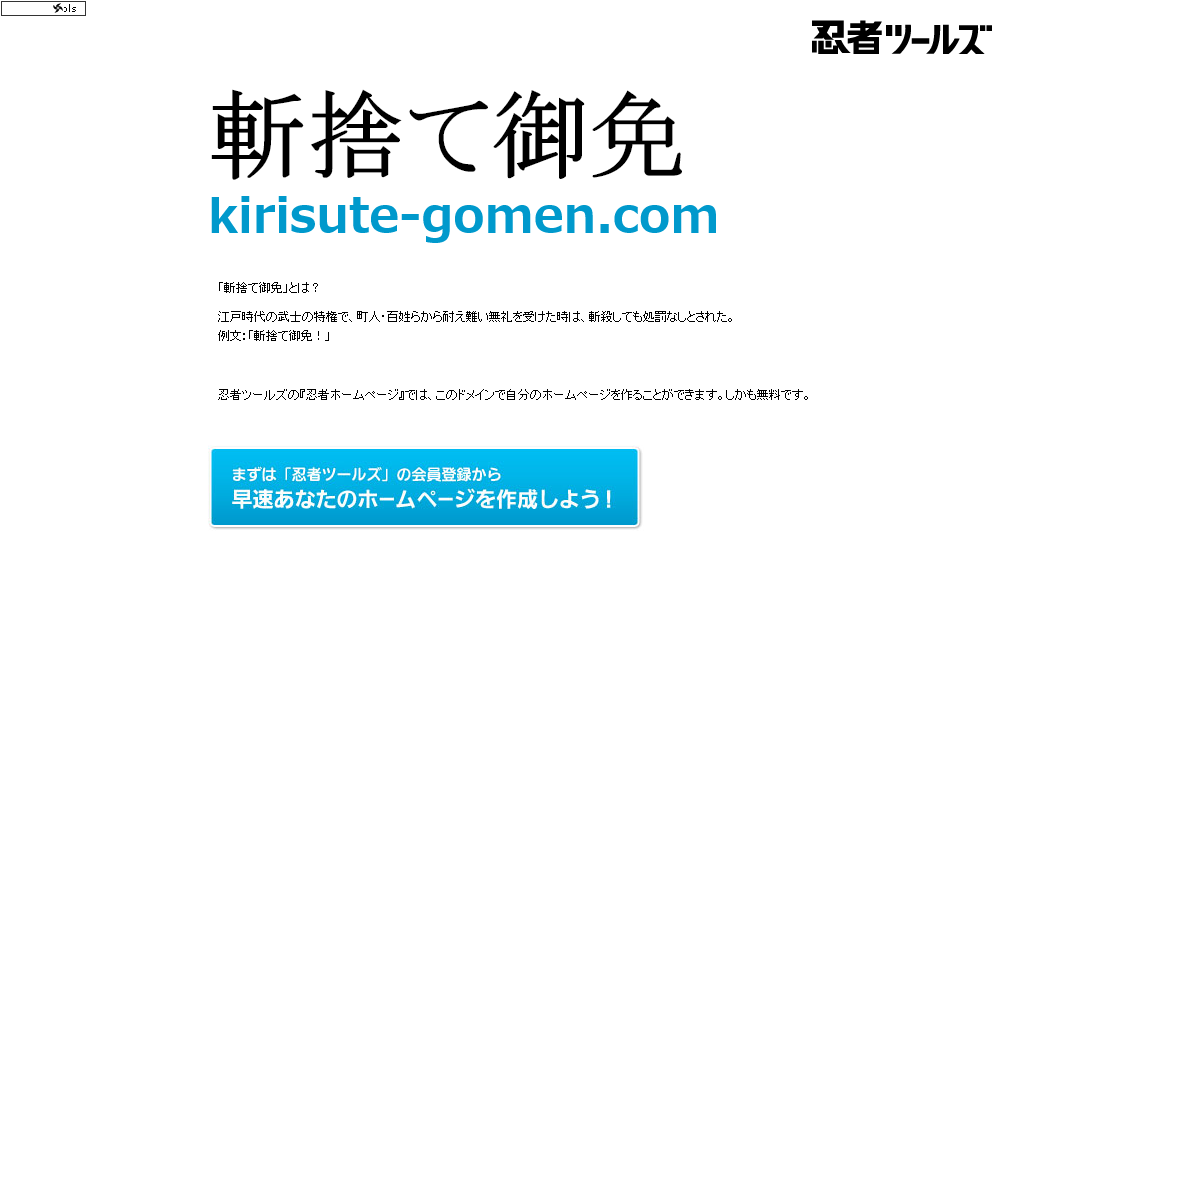 A complete backup of kirisute-gomen.com